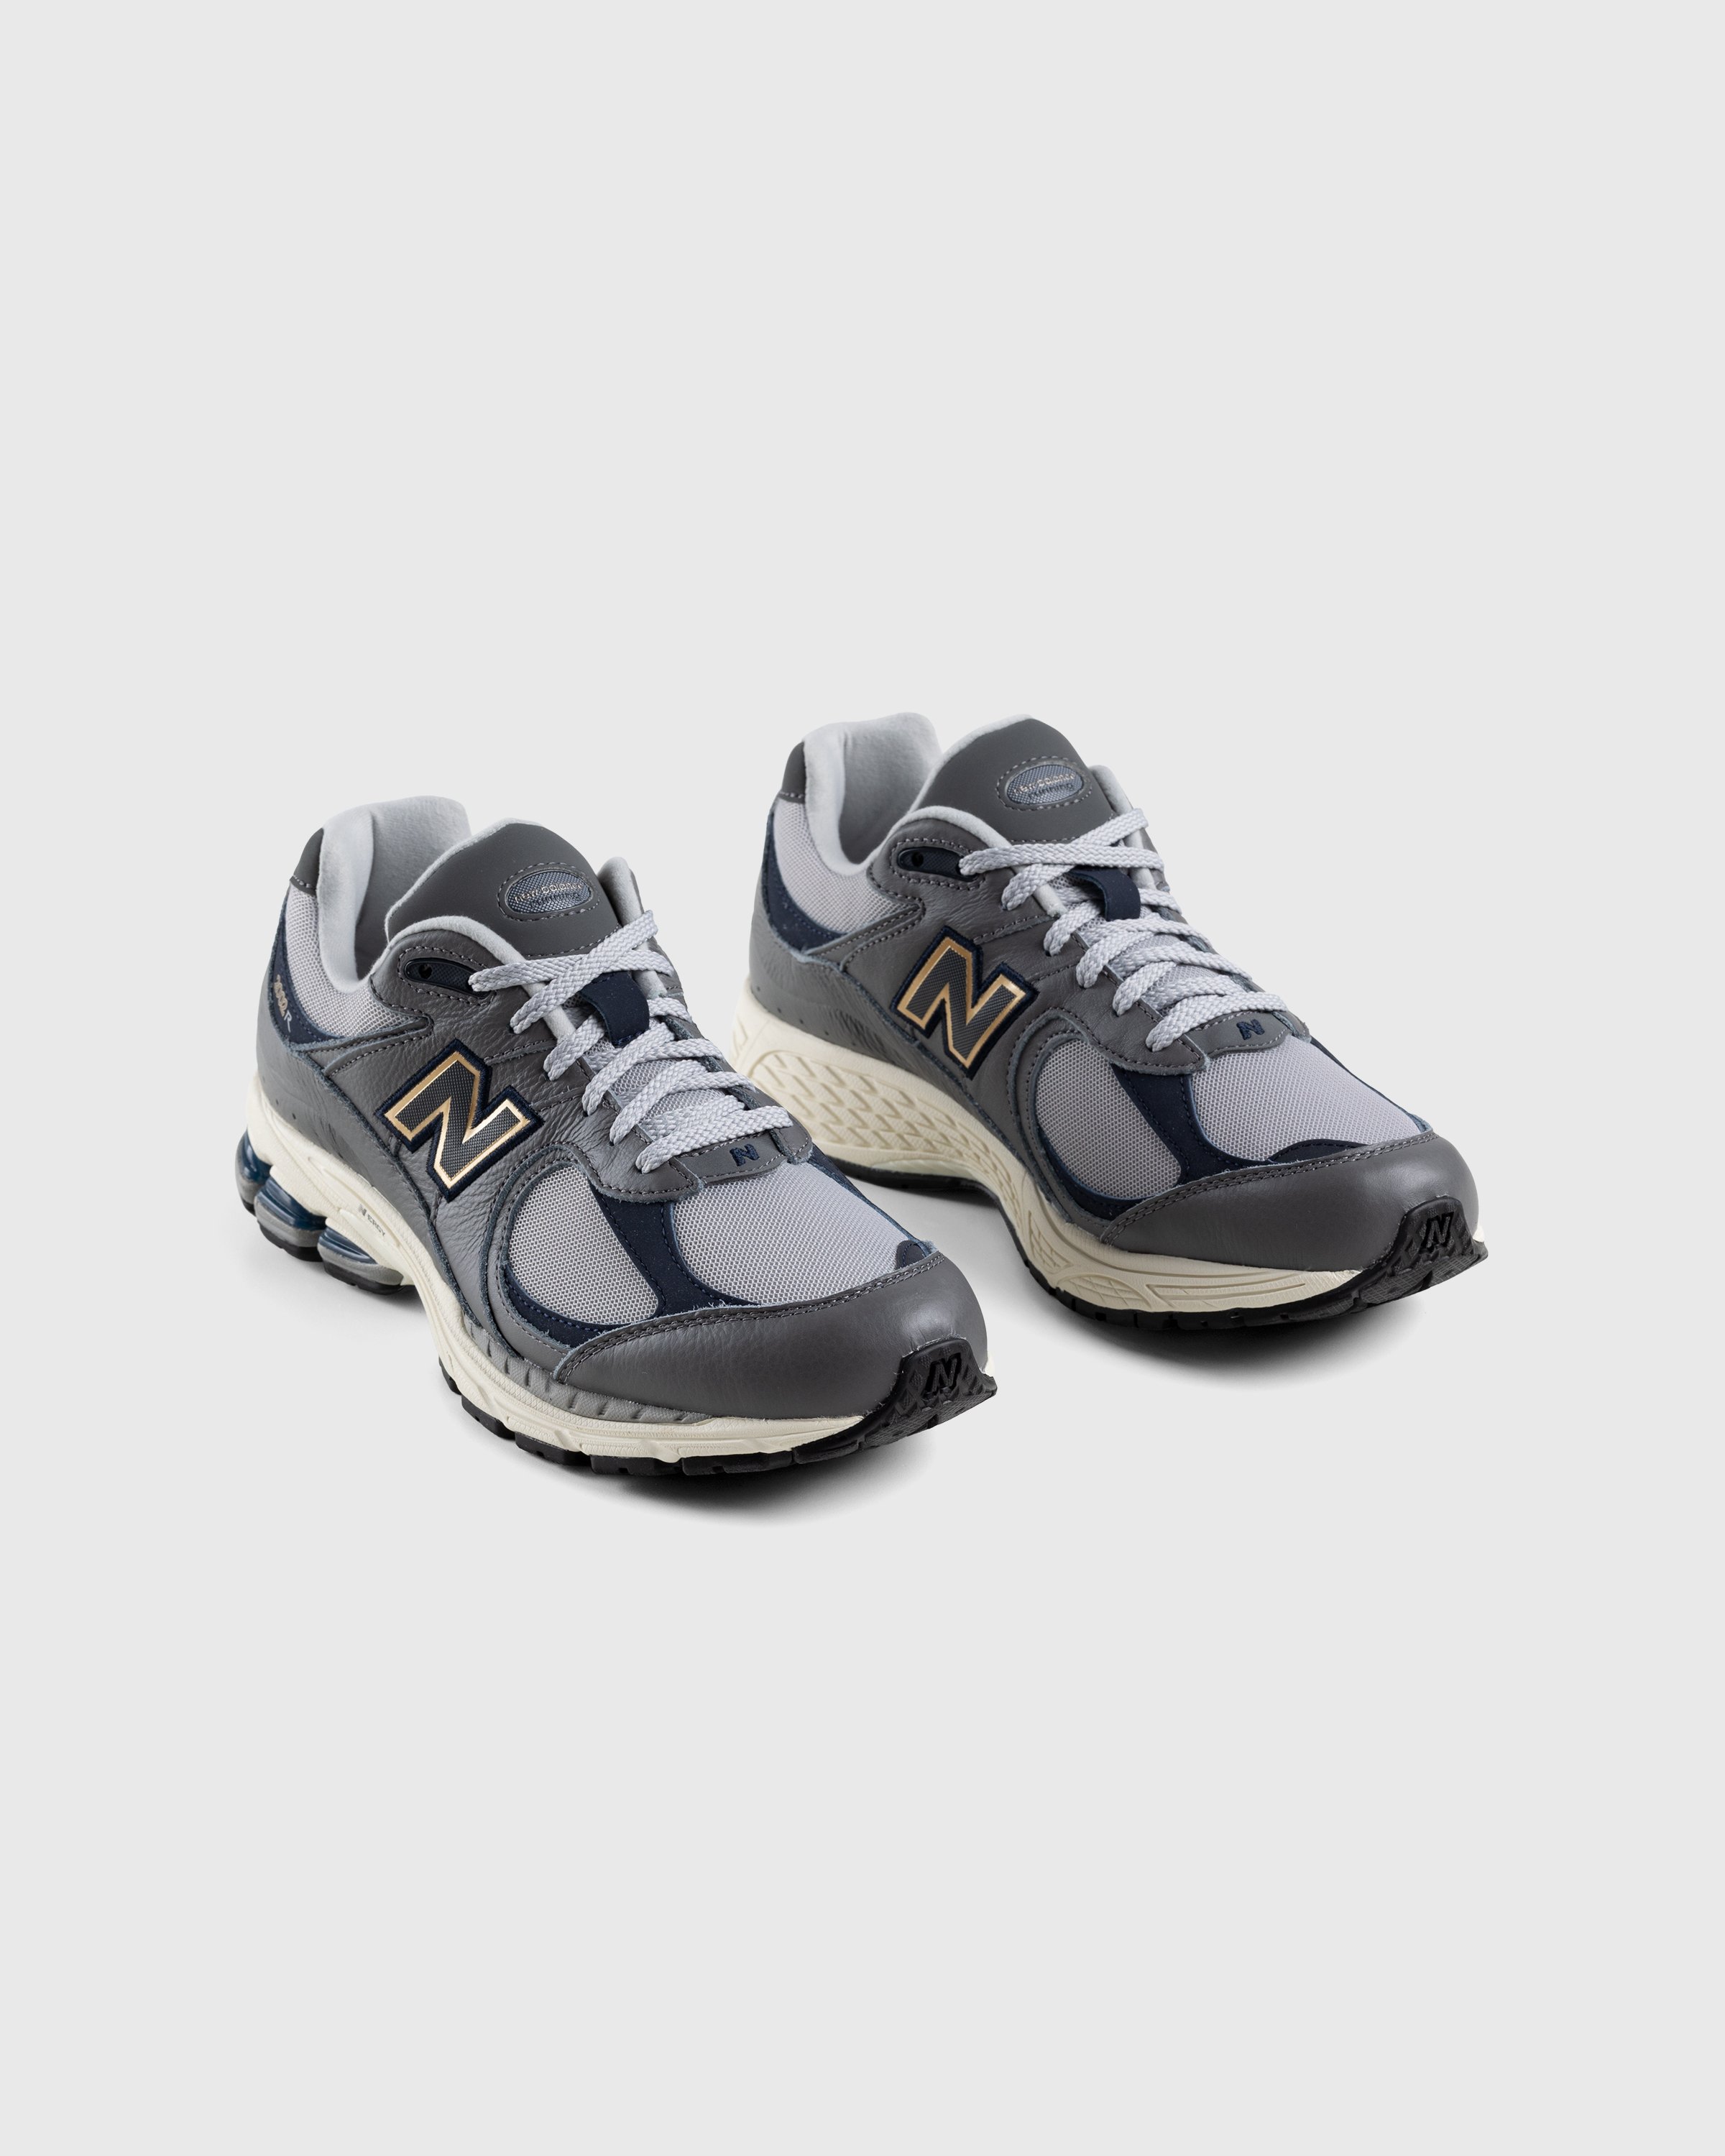 New Balance - M2002RHP Castle Rock - Footwear - Grey - Image 3